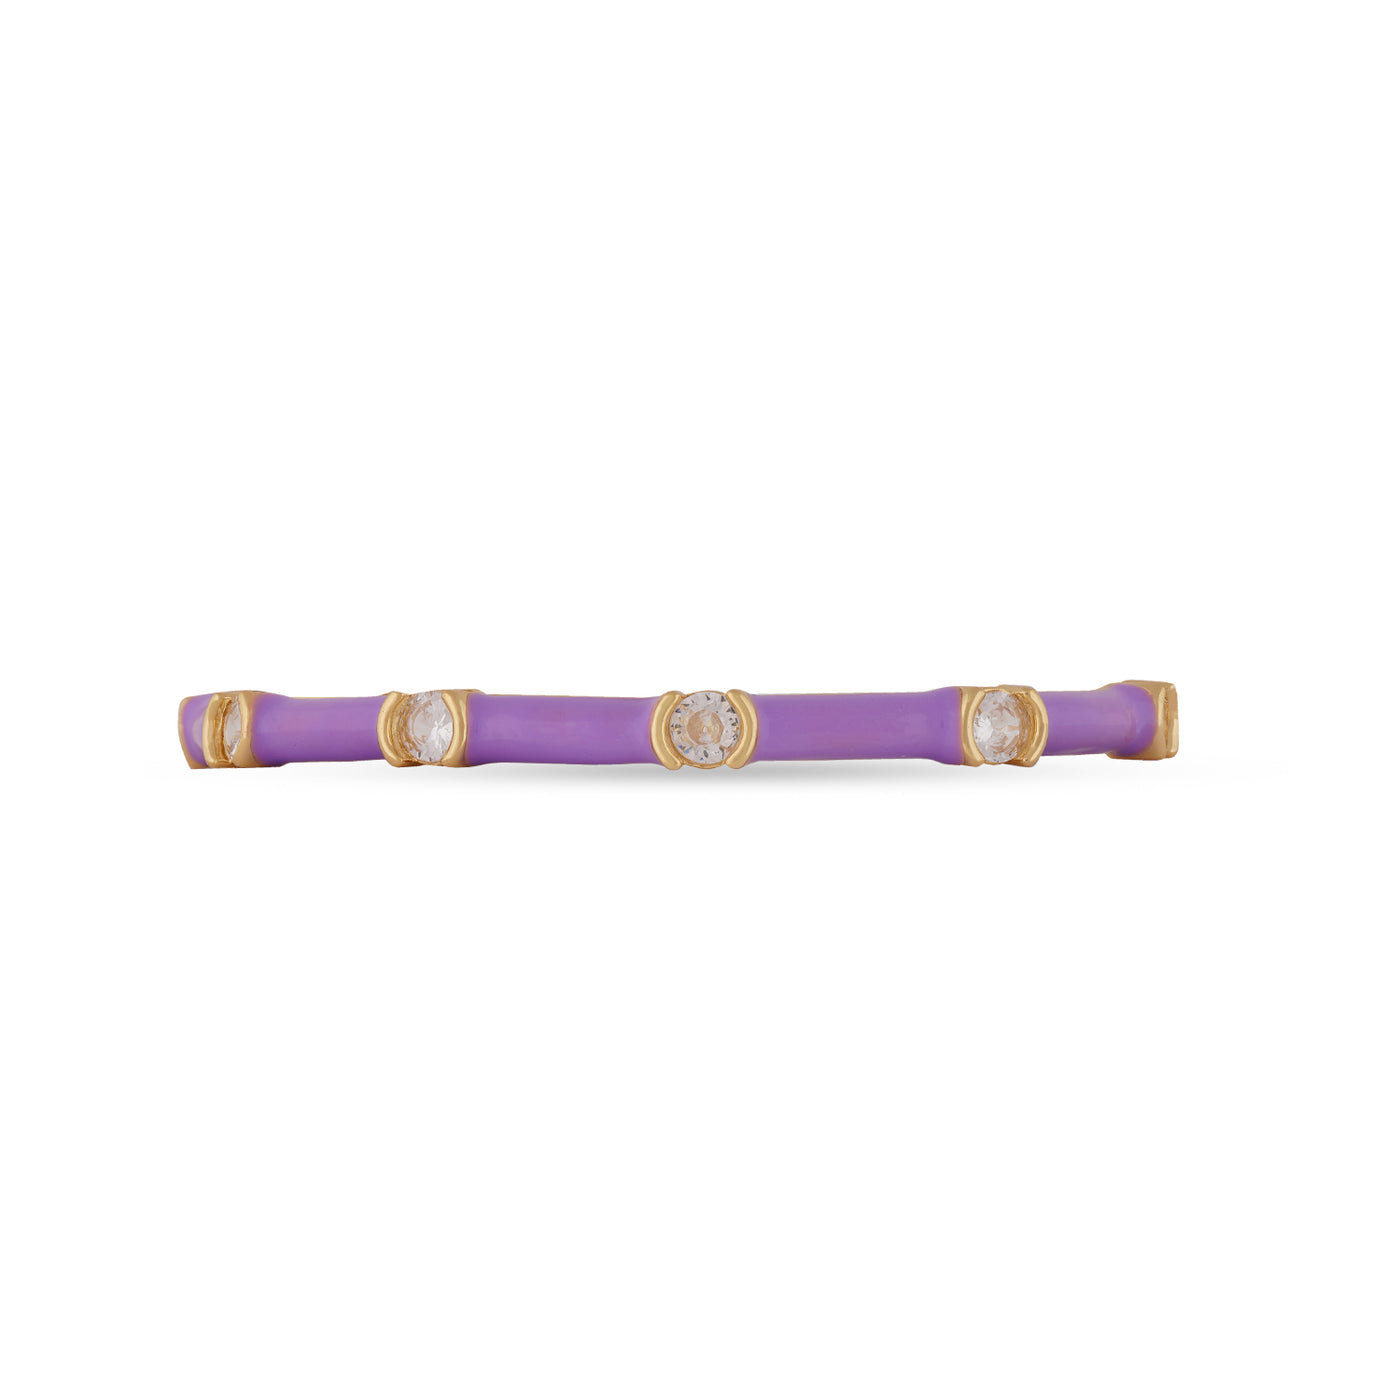 Purple and Gold Bracelet 